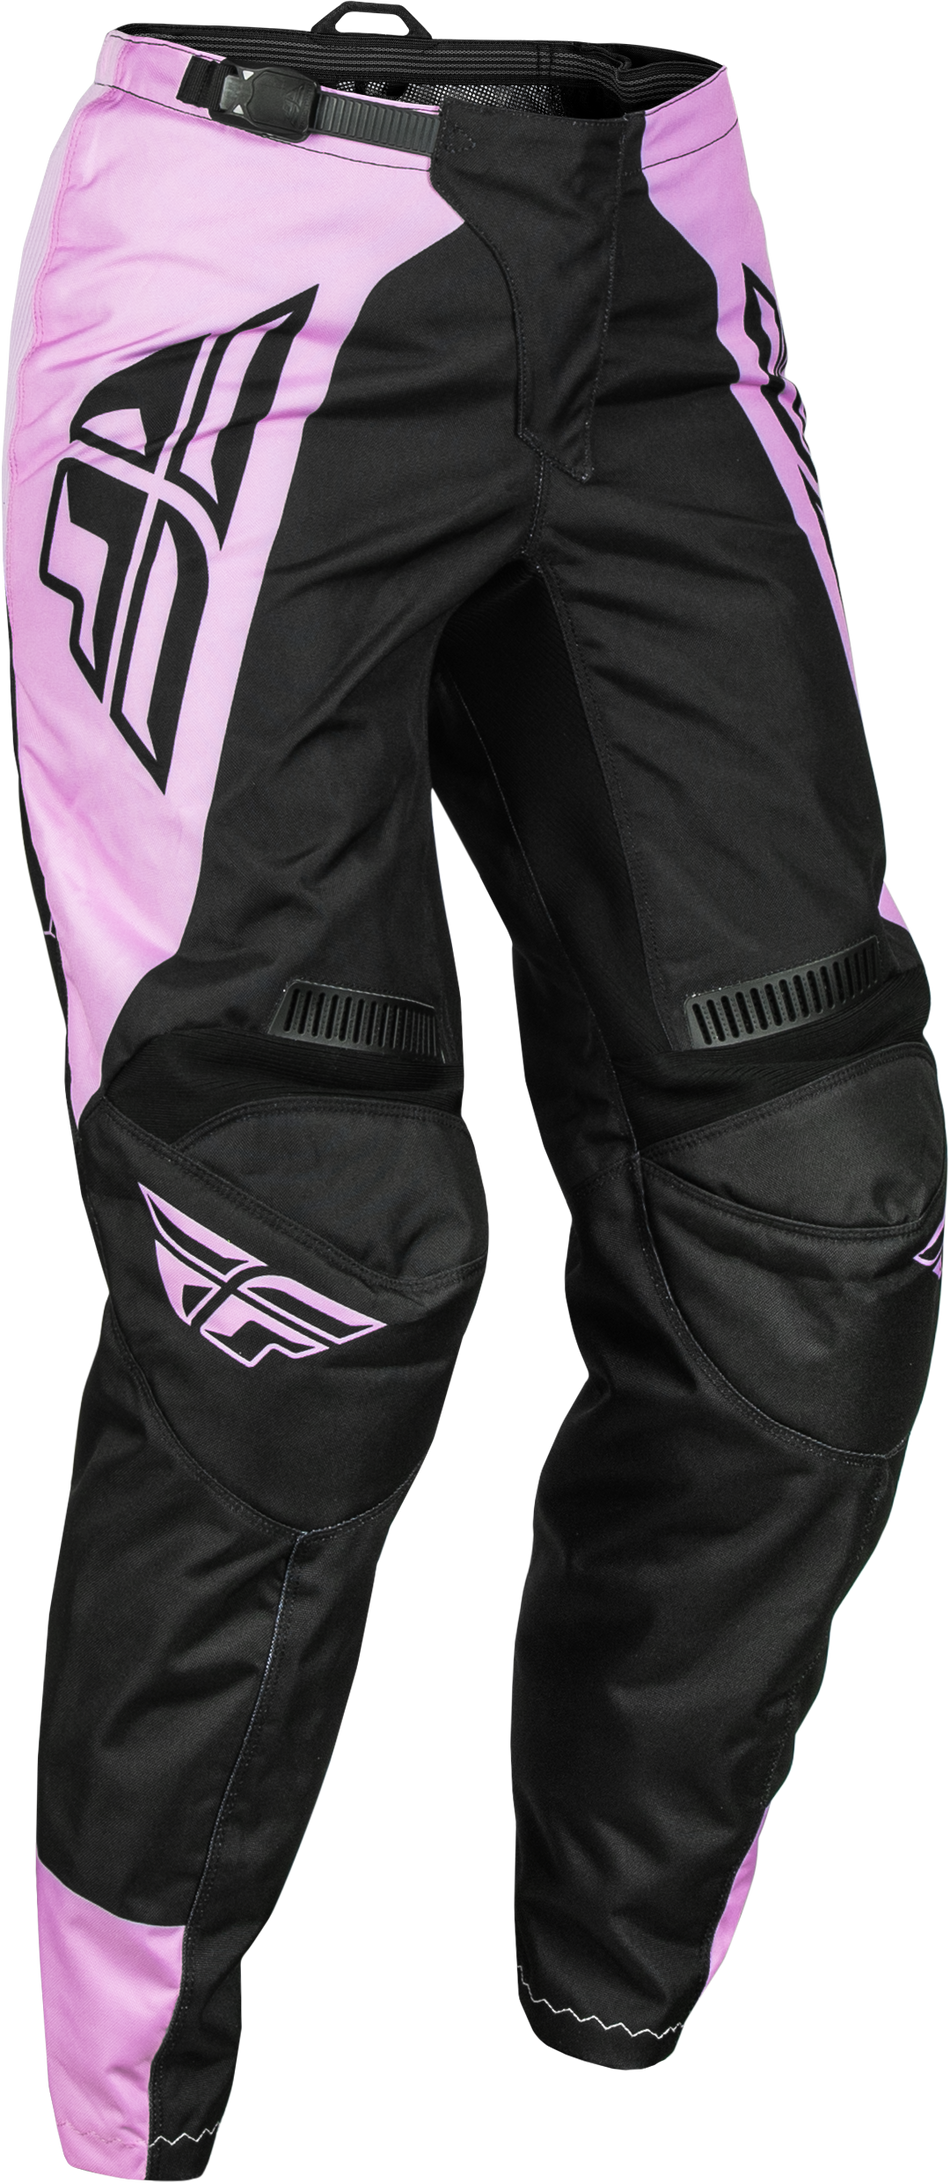 FLY RACING Women's F-16 Pants Black/Lavender Sz 03/04 377-83103